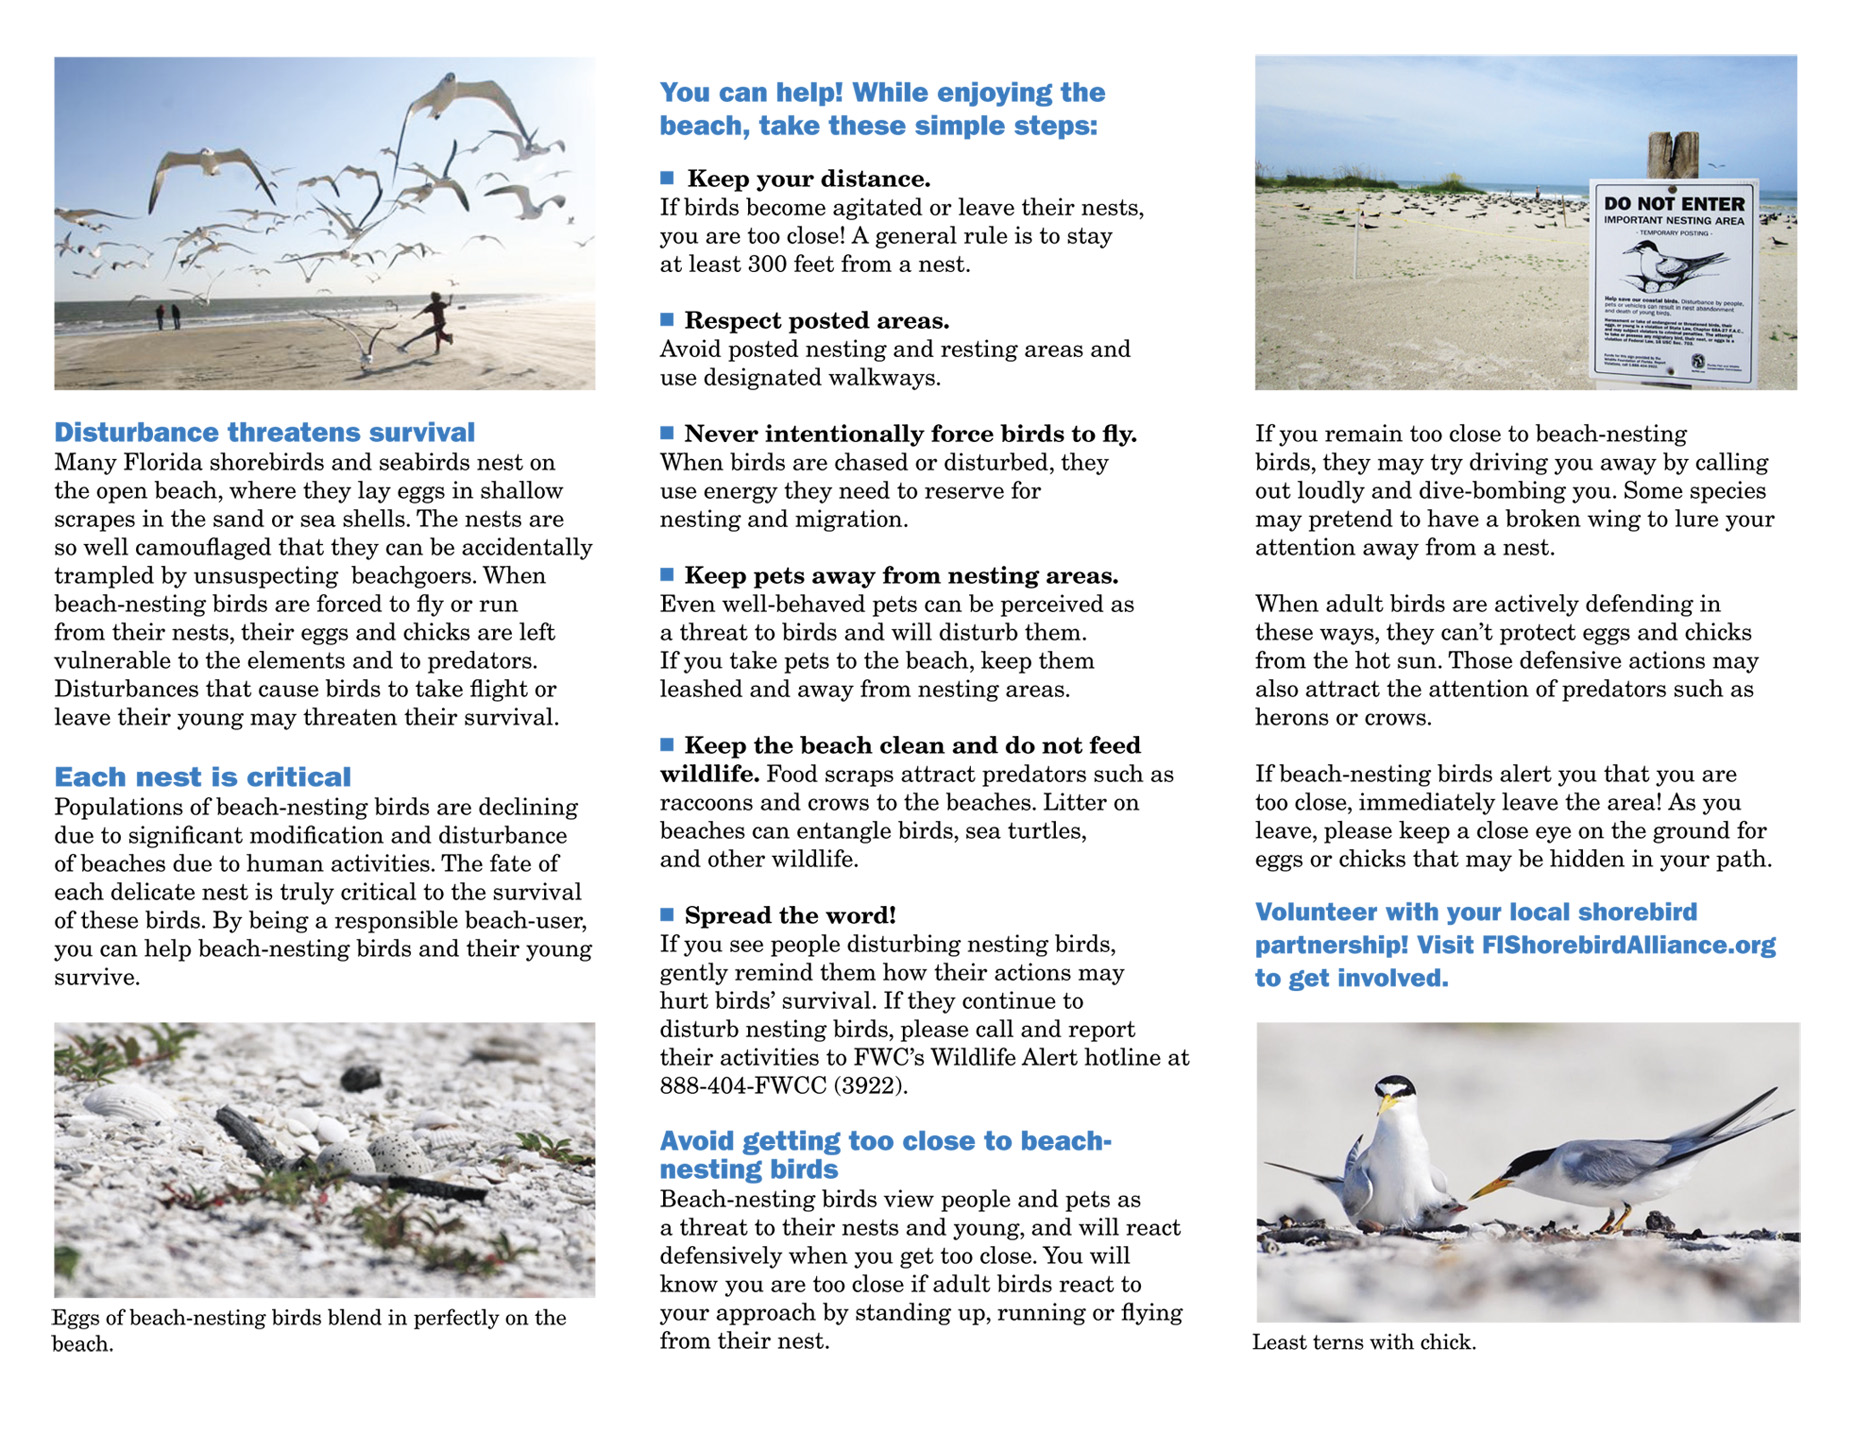 share-the-beach-tri-fold-brochure-side-2_6877794968_o